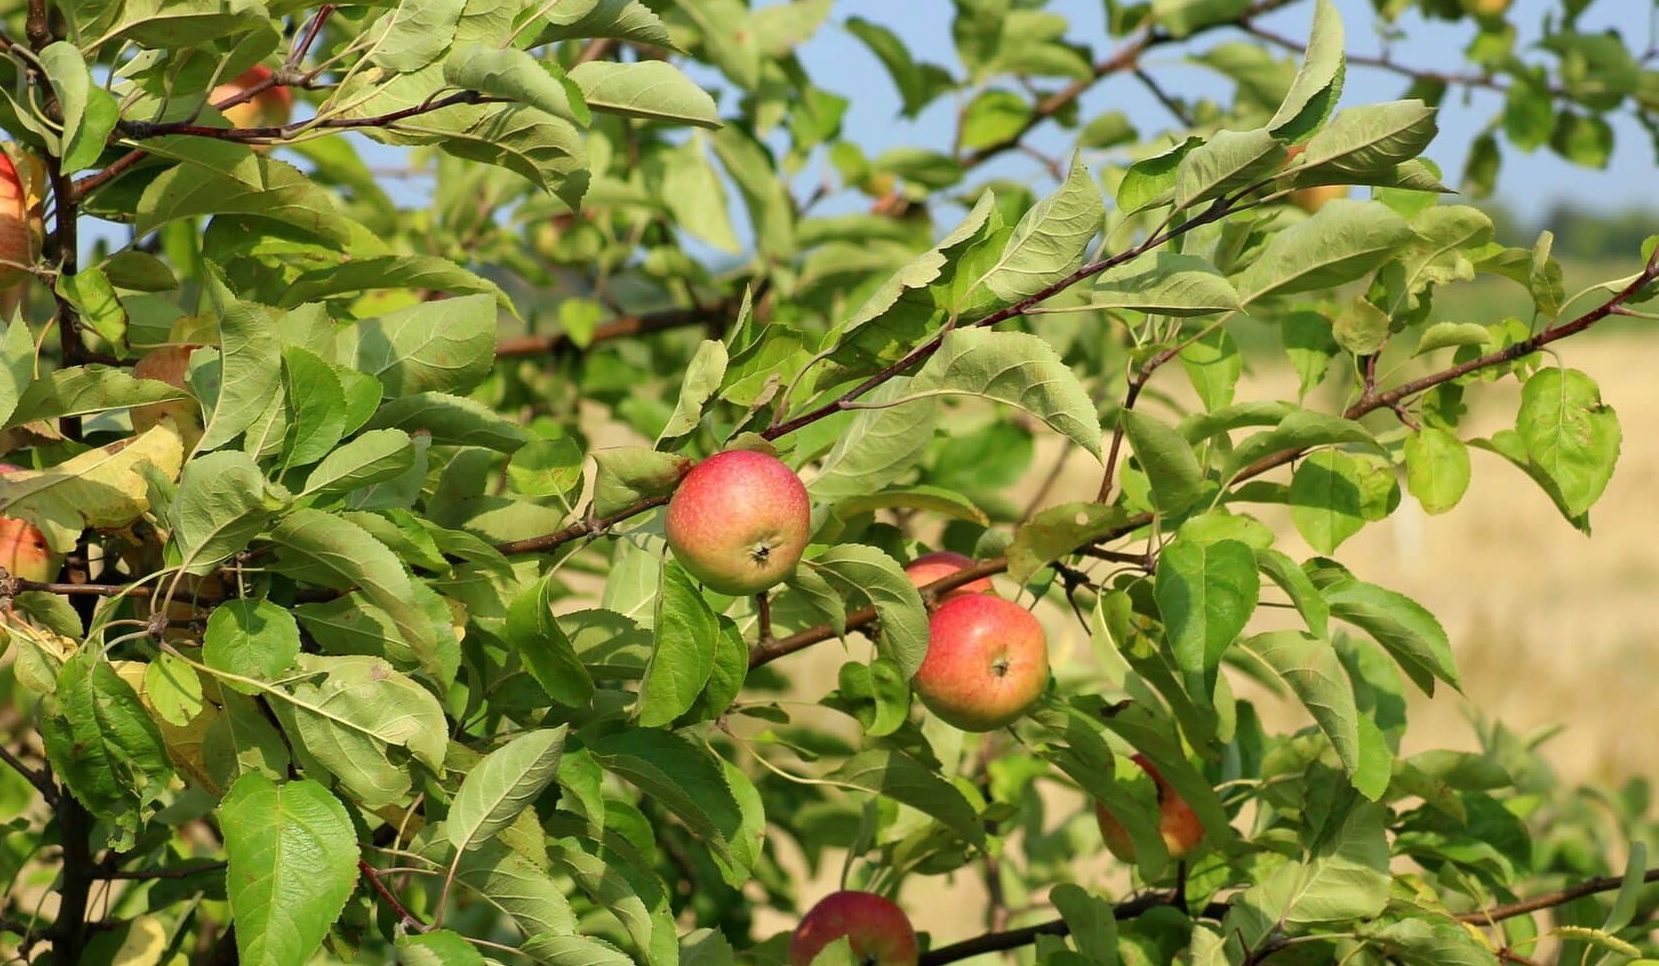 History and description of Esopus Spitzenburg apple: